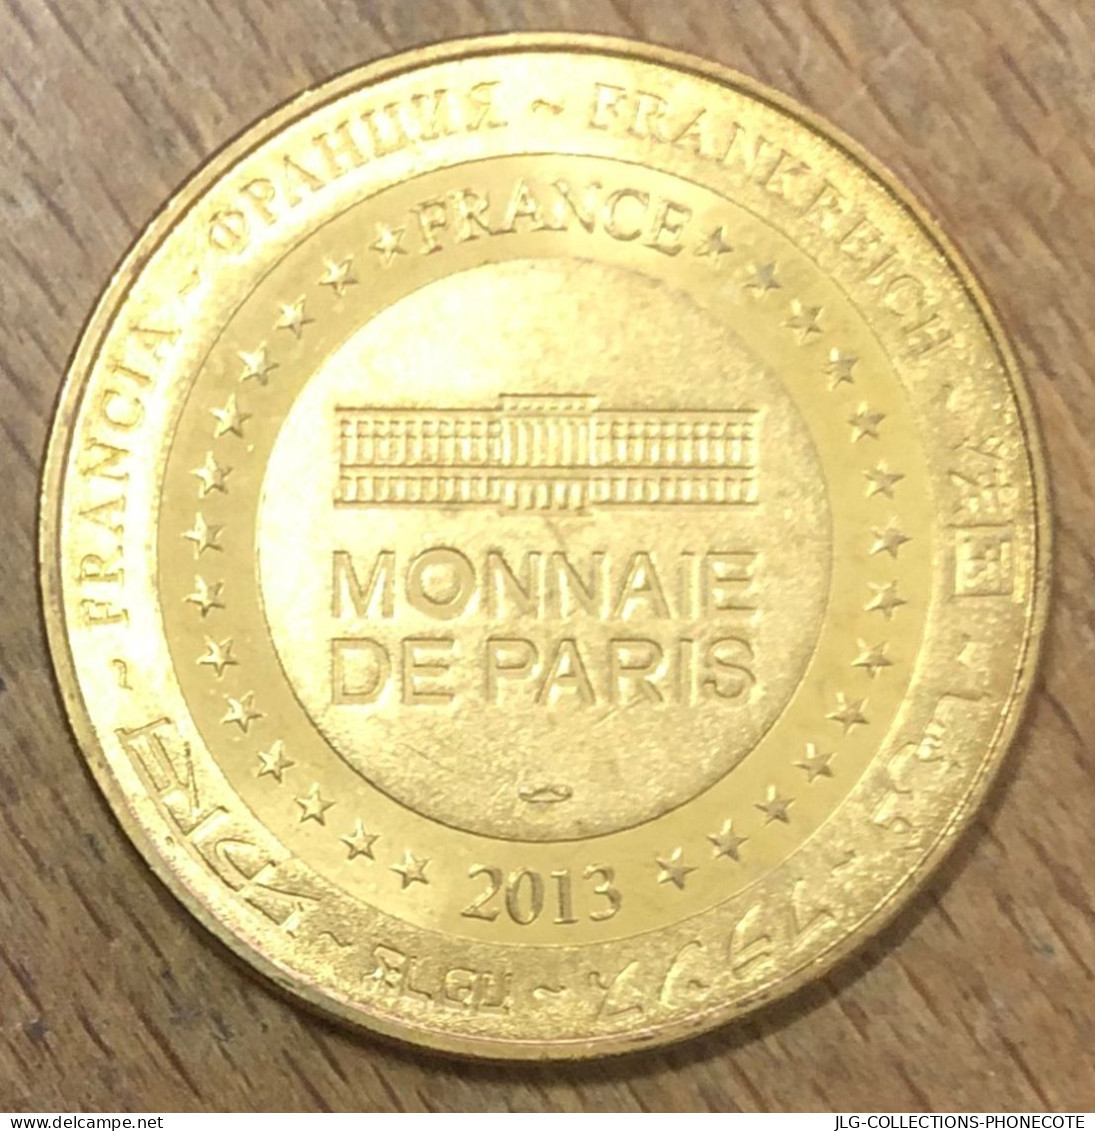 77 DISNEYLAND PARIS N°30 MICKEY 20 ANS 2013 DISNEY MDP MÉDAILLE SOUVENIR MONNAIE DE PARIS JETON MEDALS COINS TOKENS - 2013